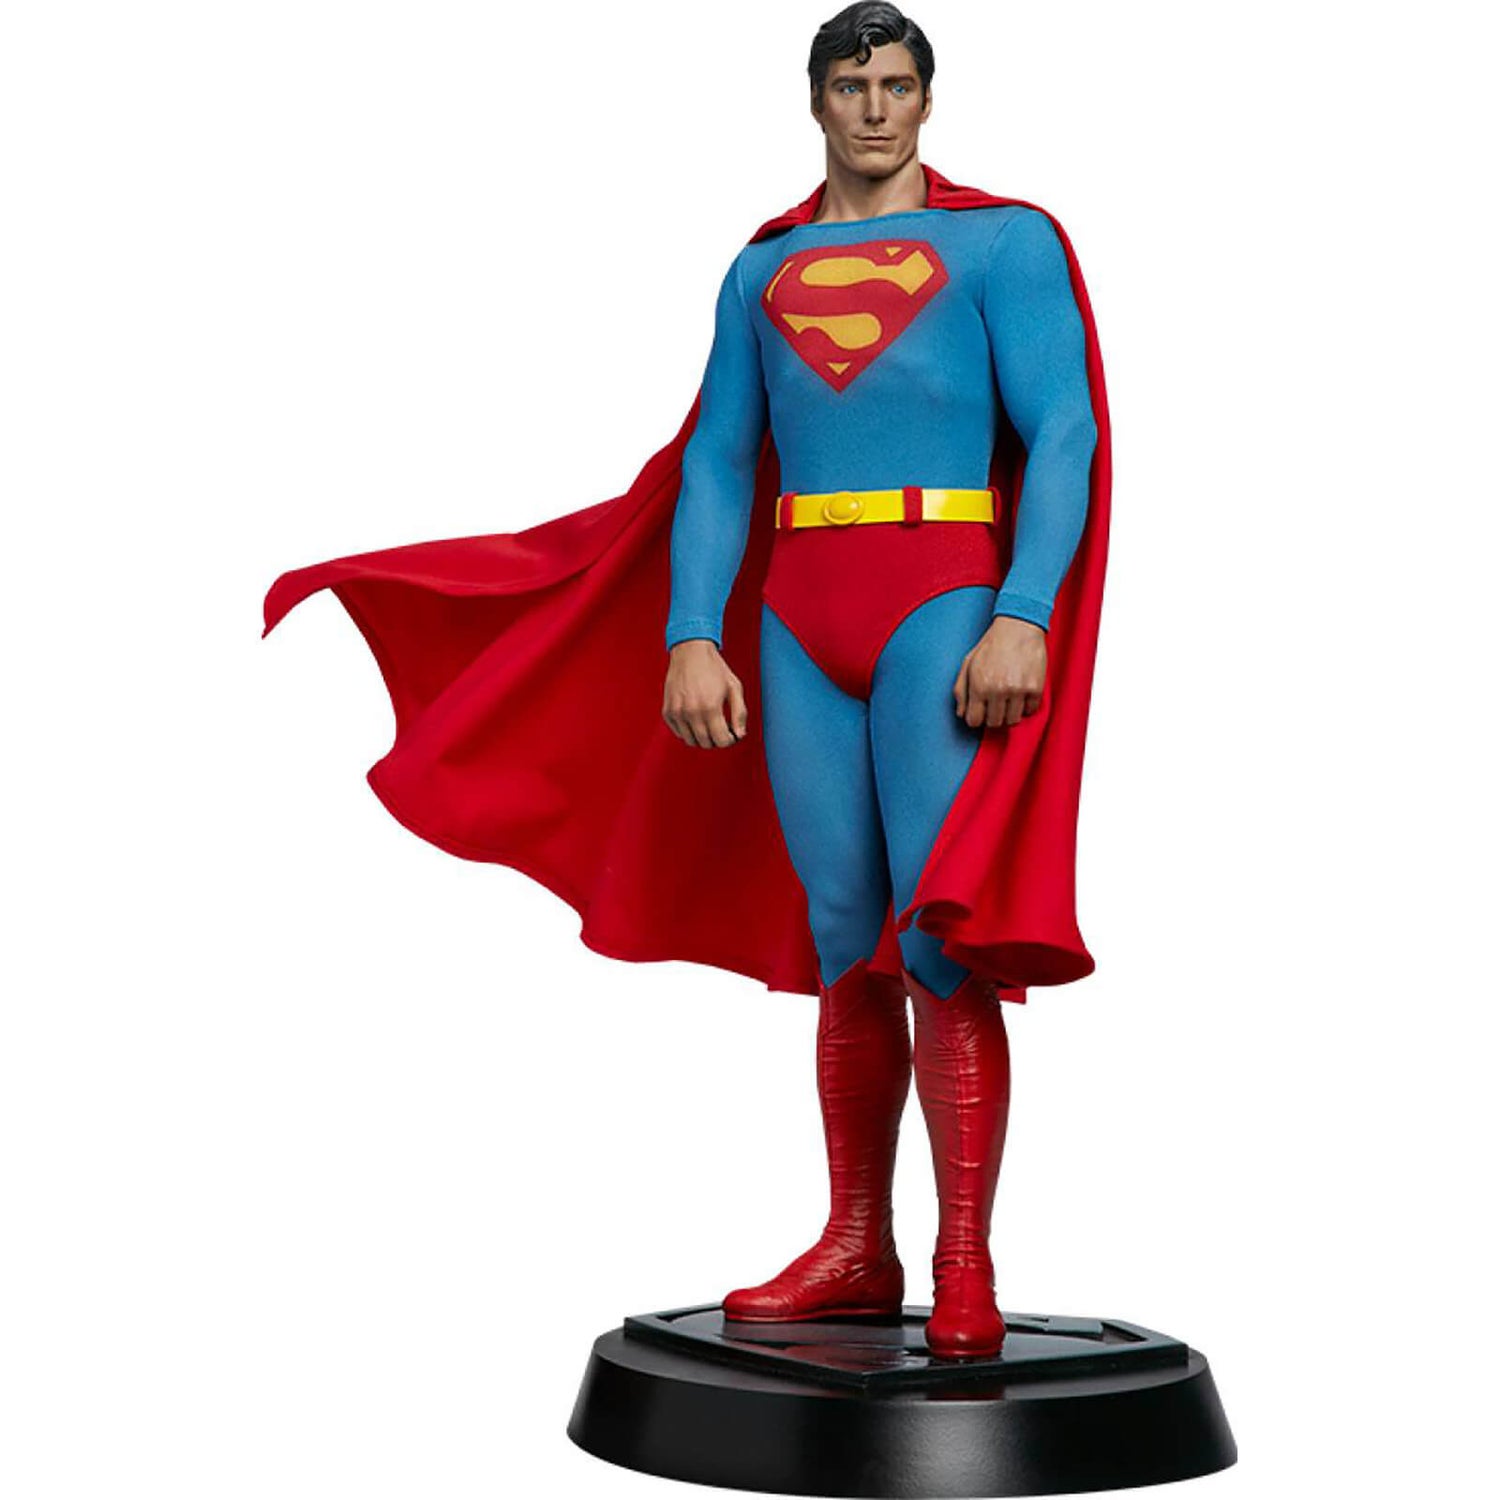 Sideshow DC Comics Superman: Der Film Premium Figur 20,5 Zoll